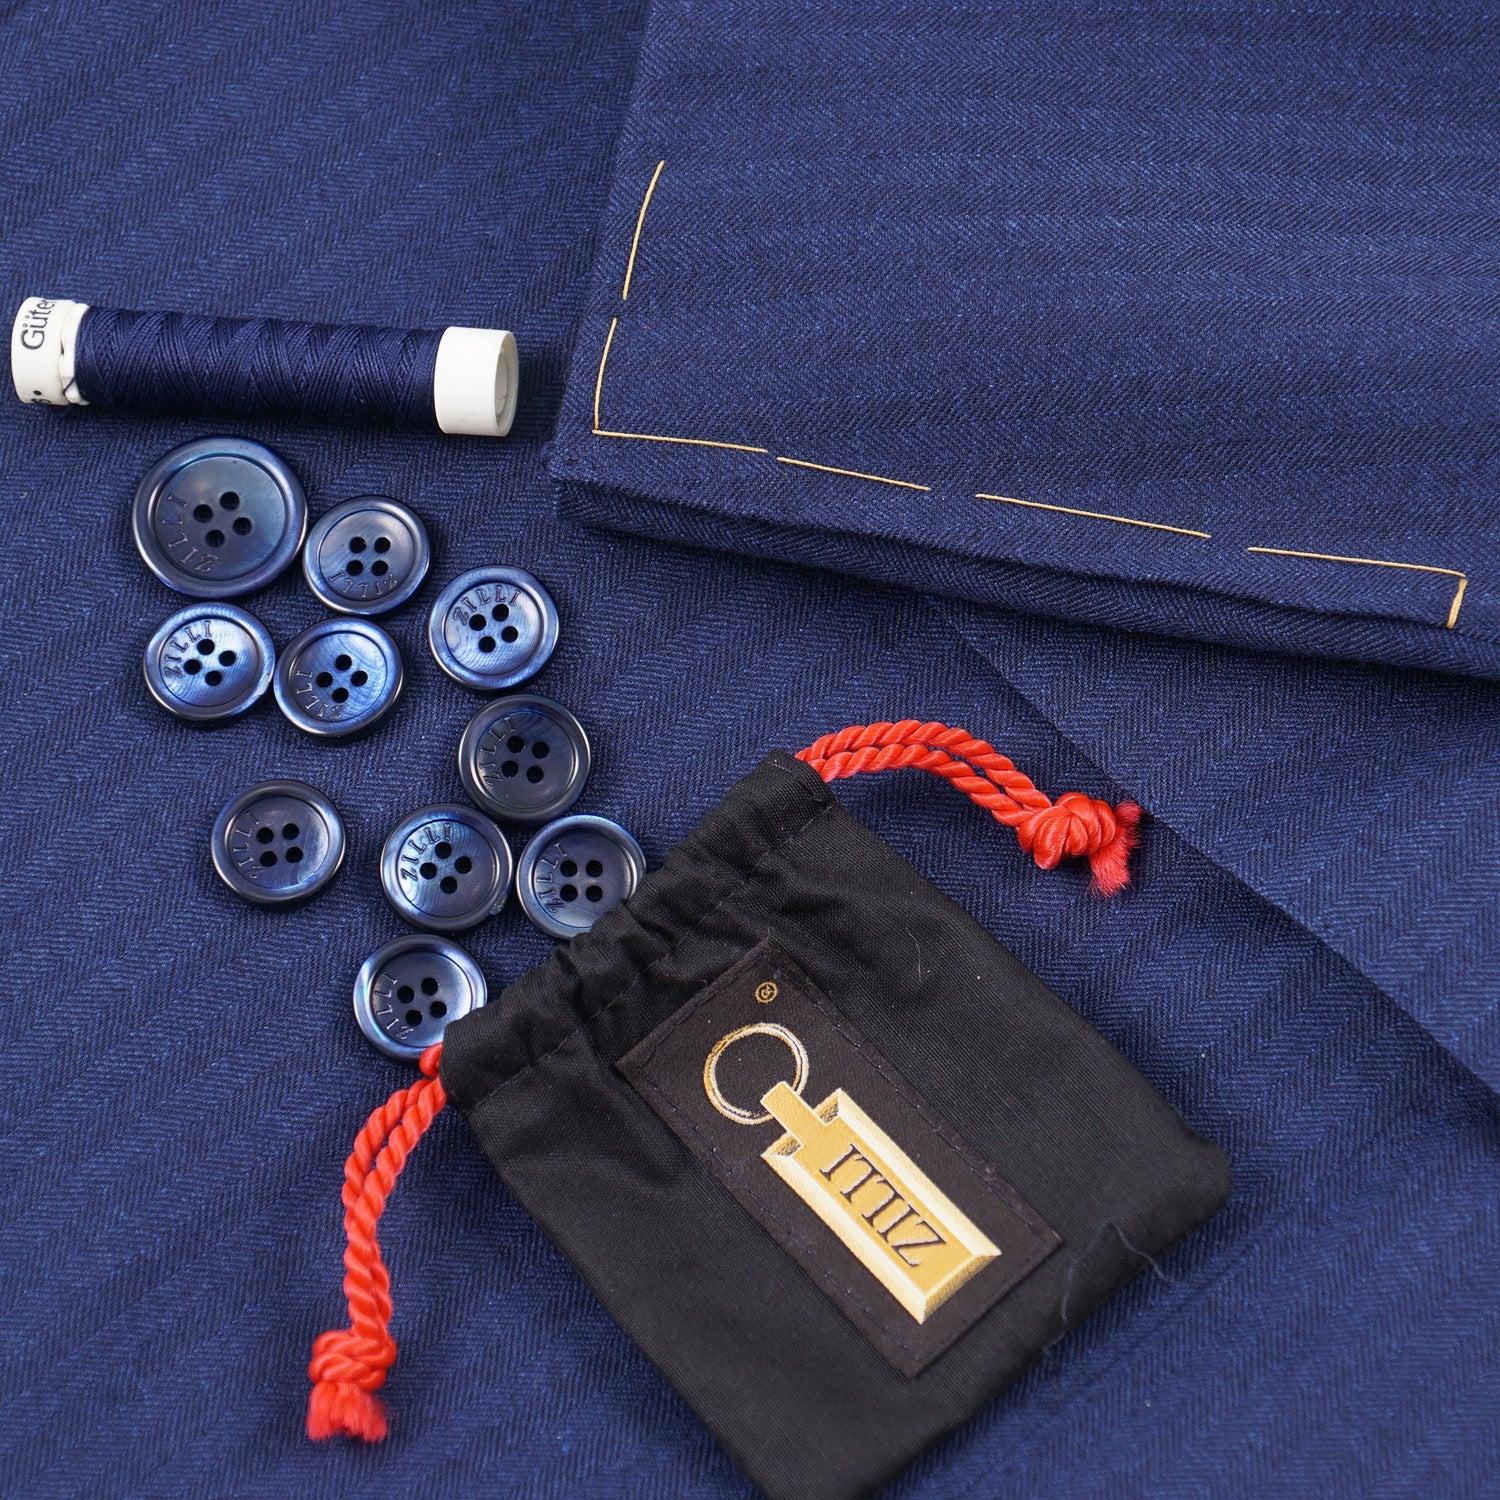 Zilli Super 150s Wool and Silk Suit - Top Shelf Apparel